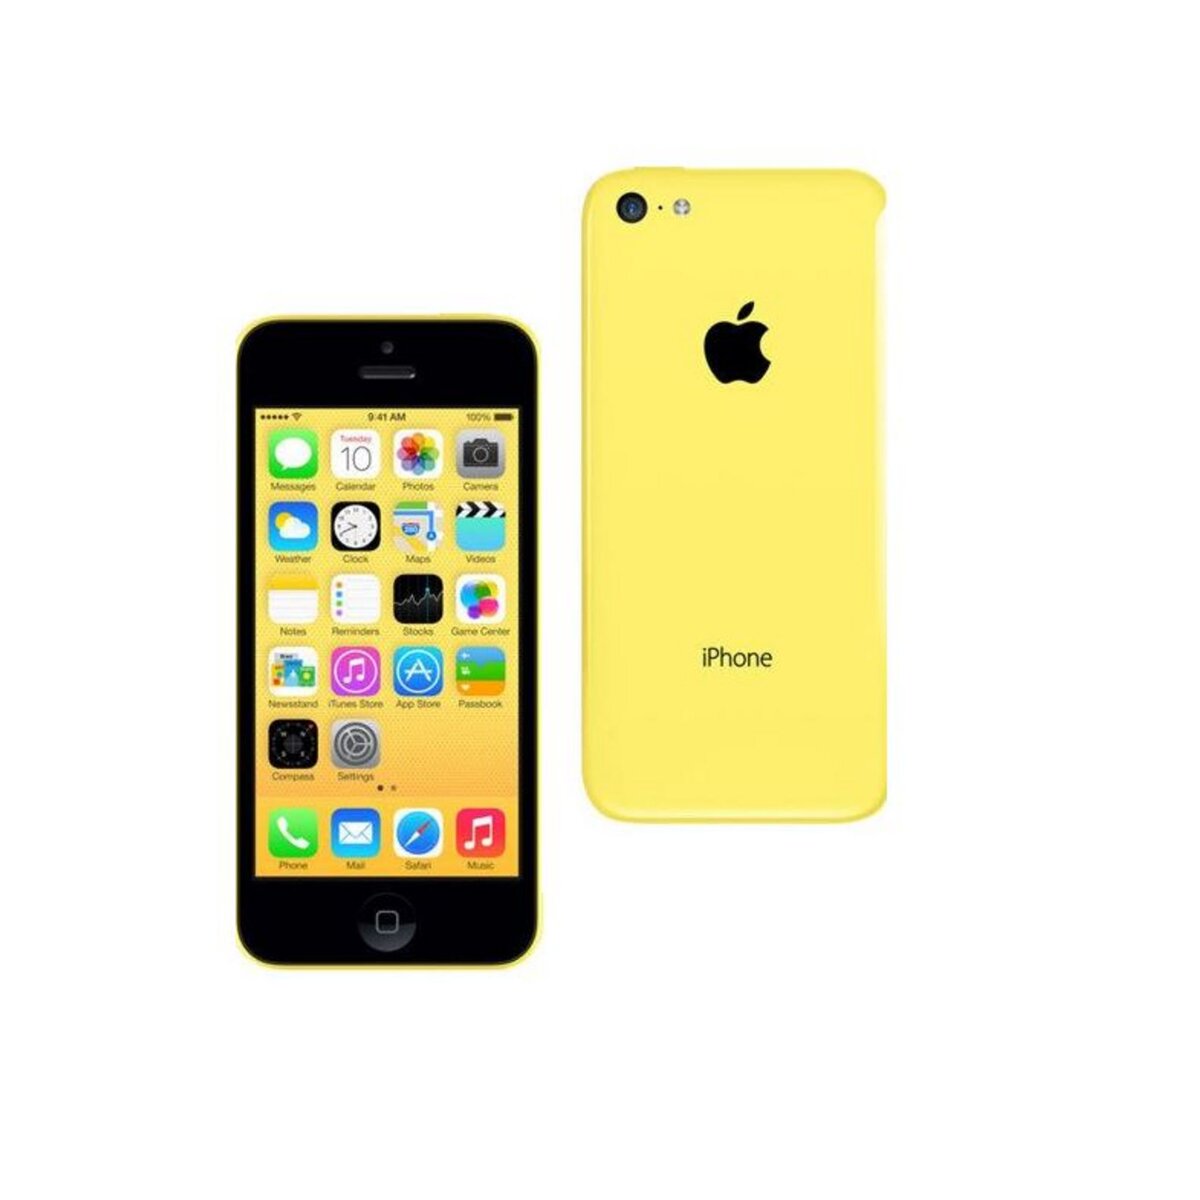 APPLE iPhone 5C - Jaune - Reconditionné Lagoona - Grade A - 8 Go